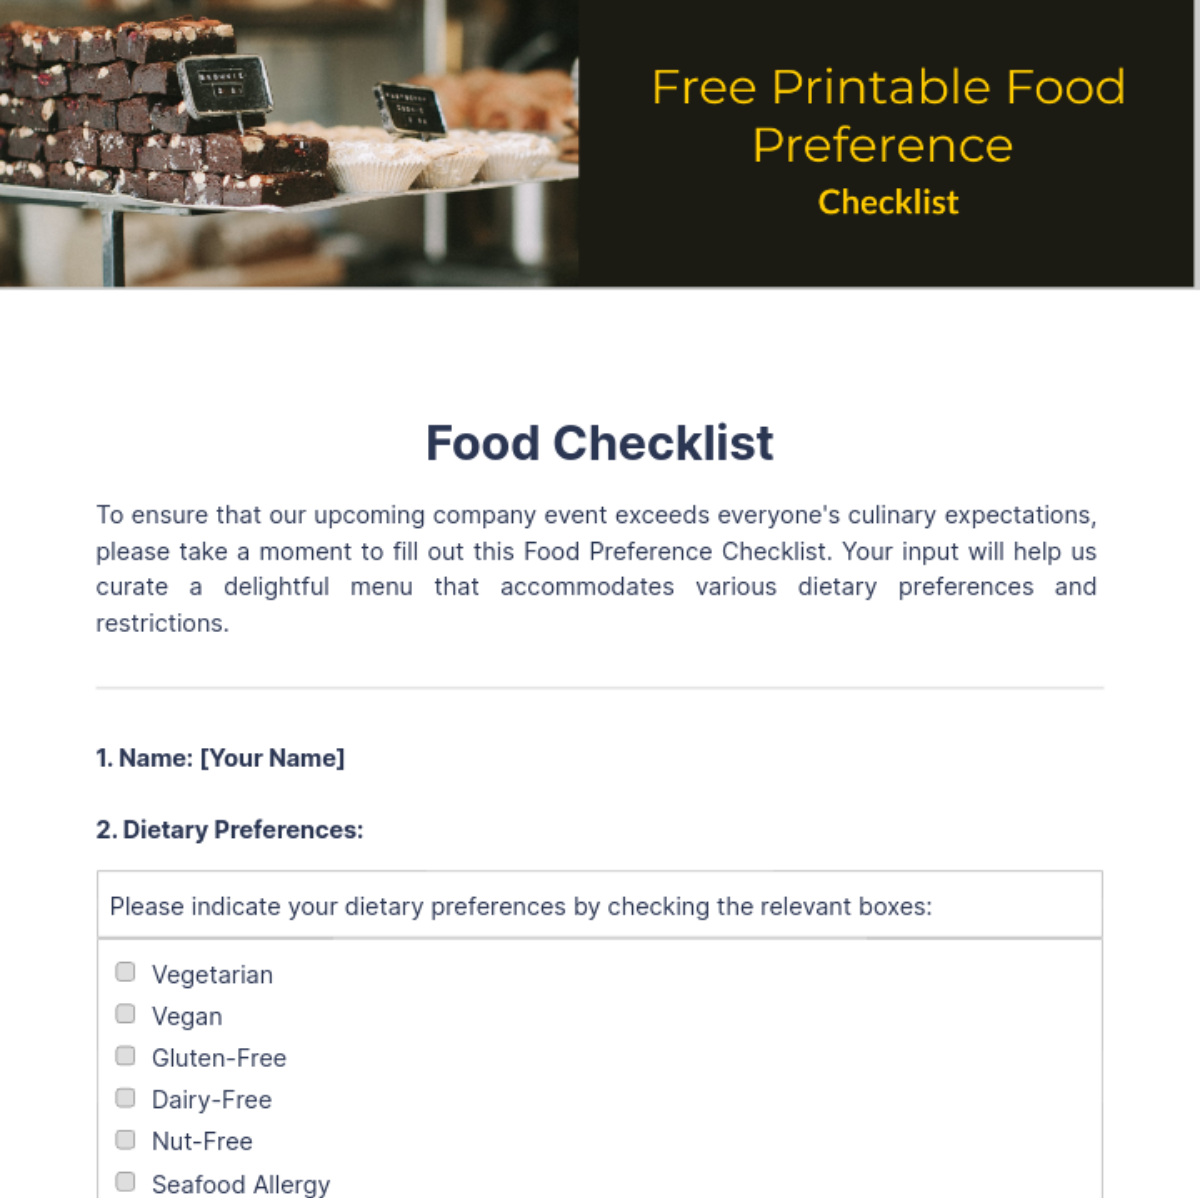 Free Printable Food Preference Checklist Template